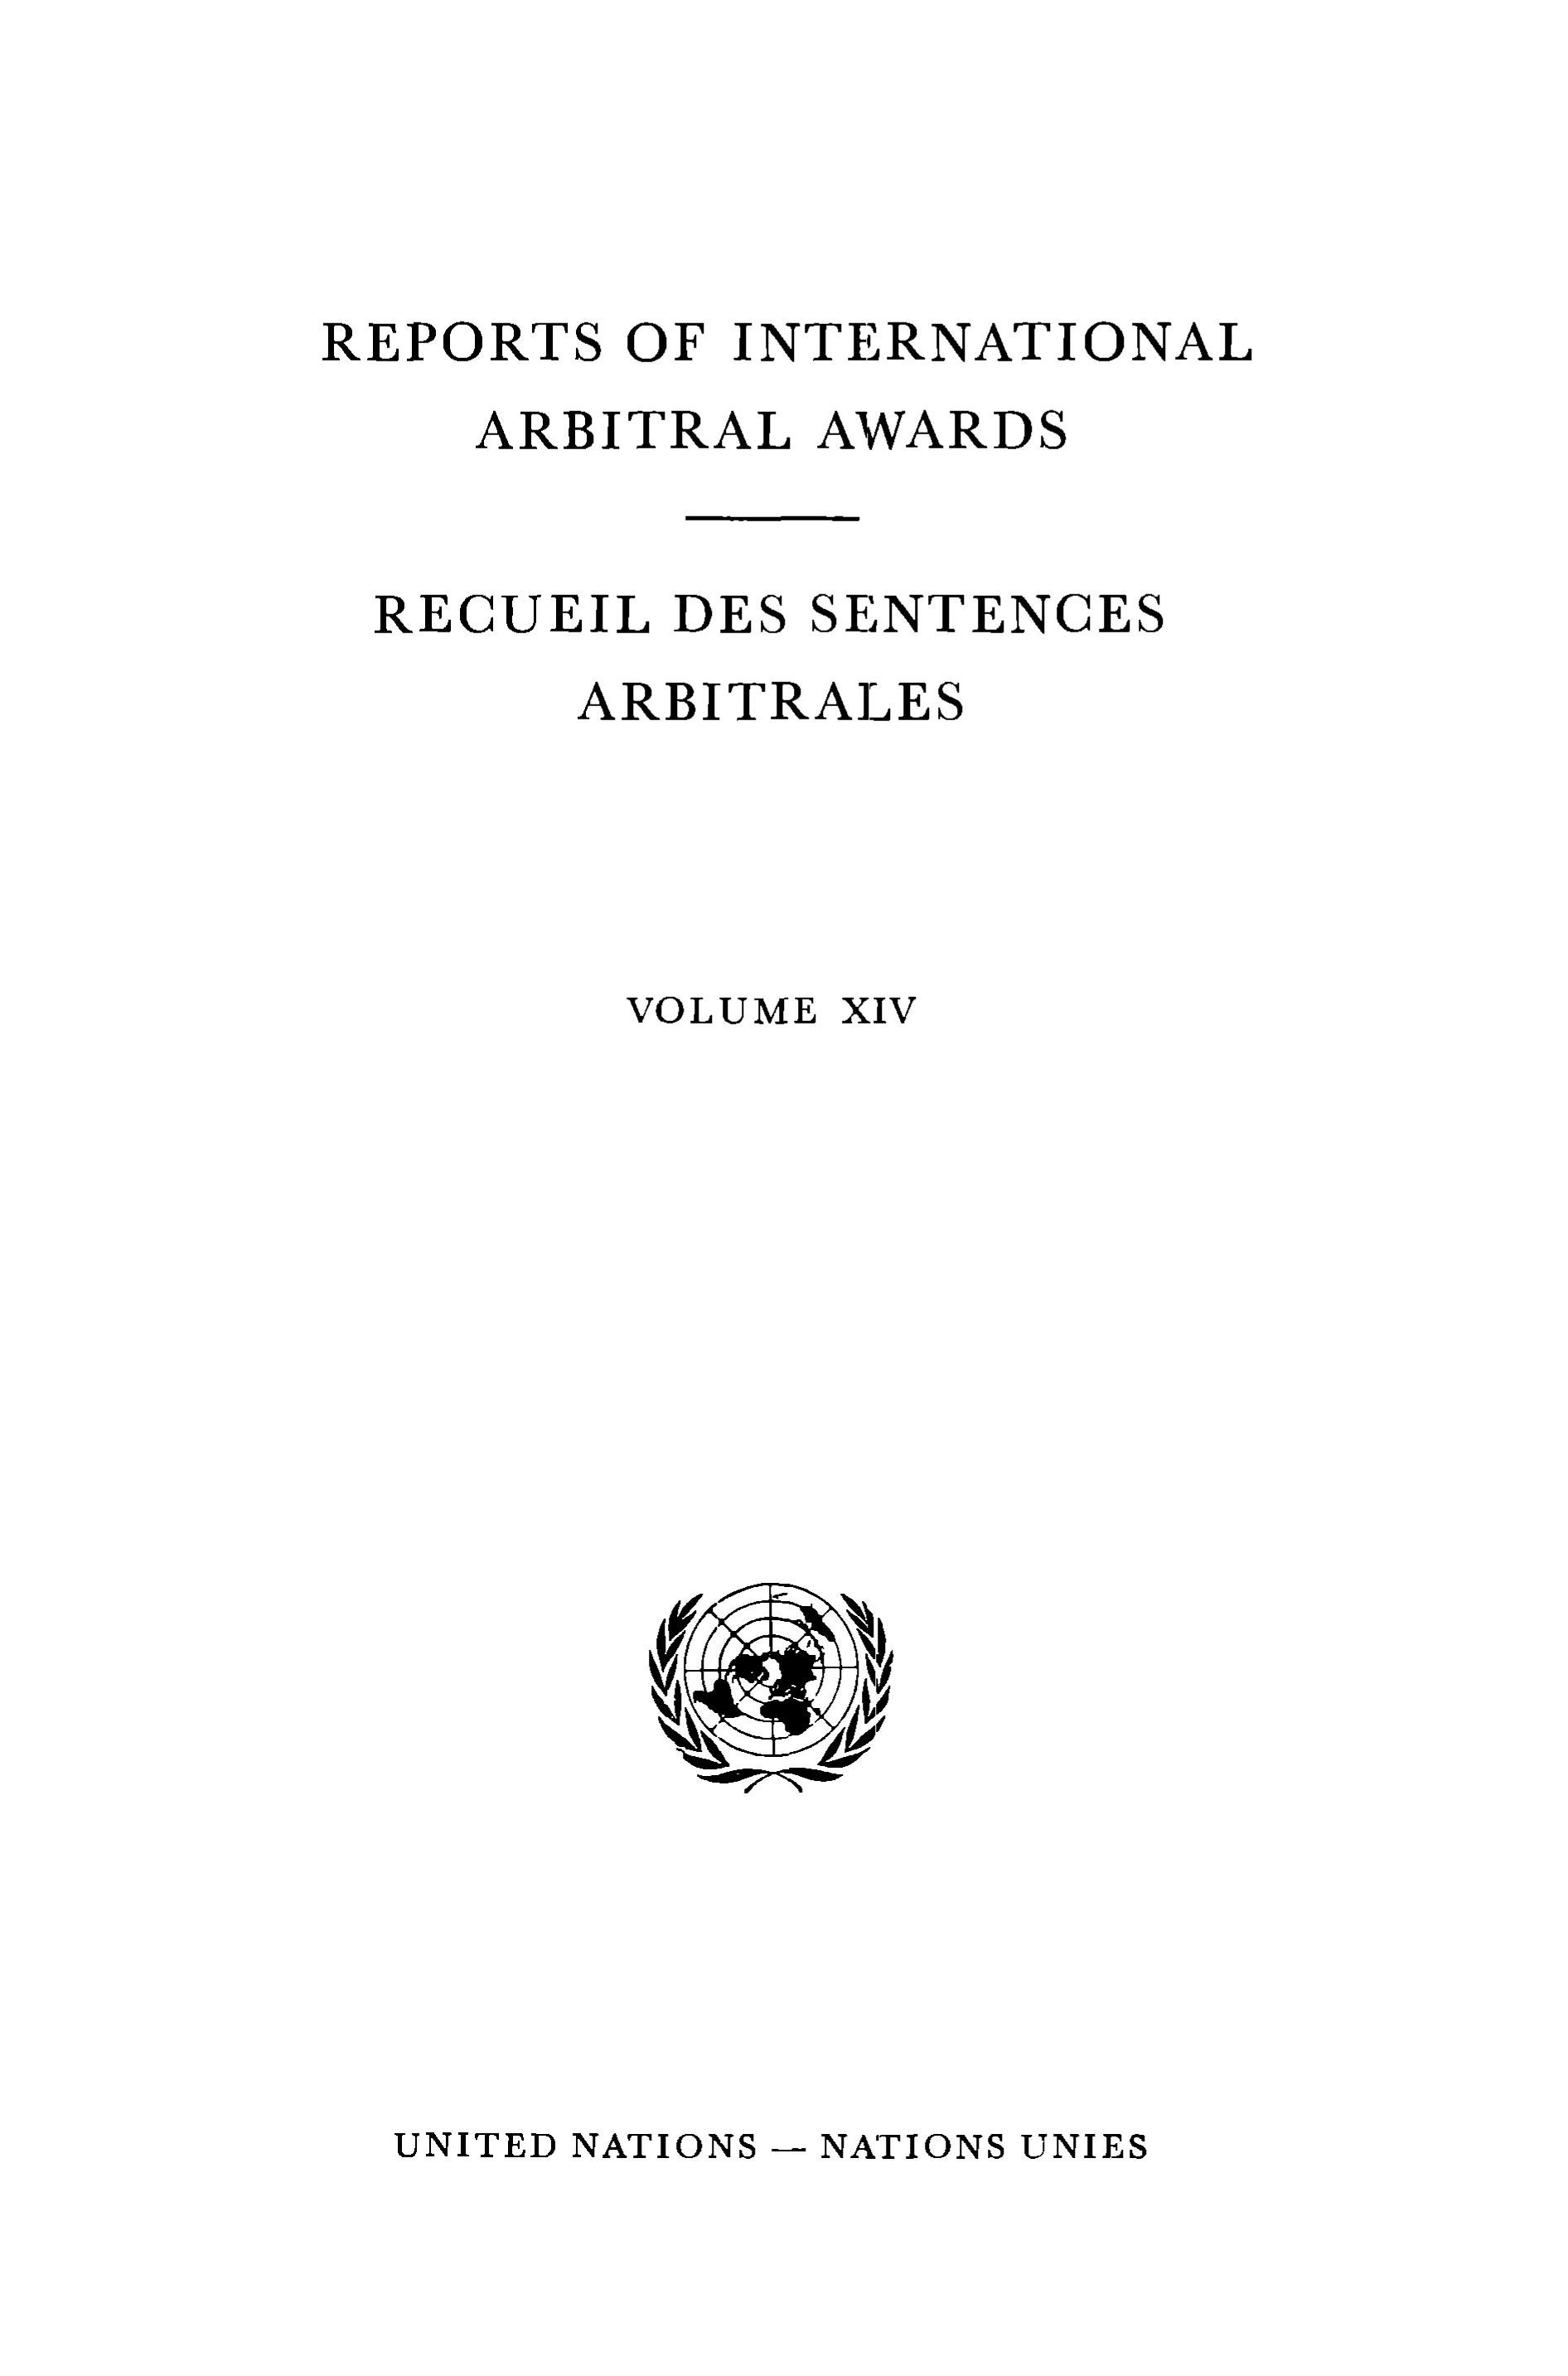 image of Reports of International Arbitral Awards, Vol. XIV